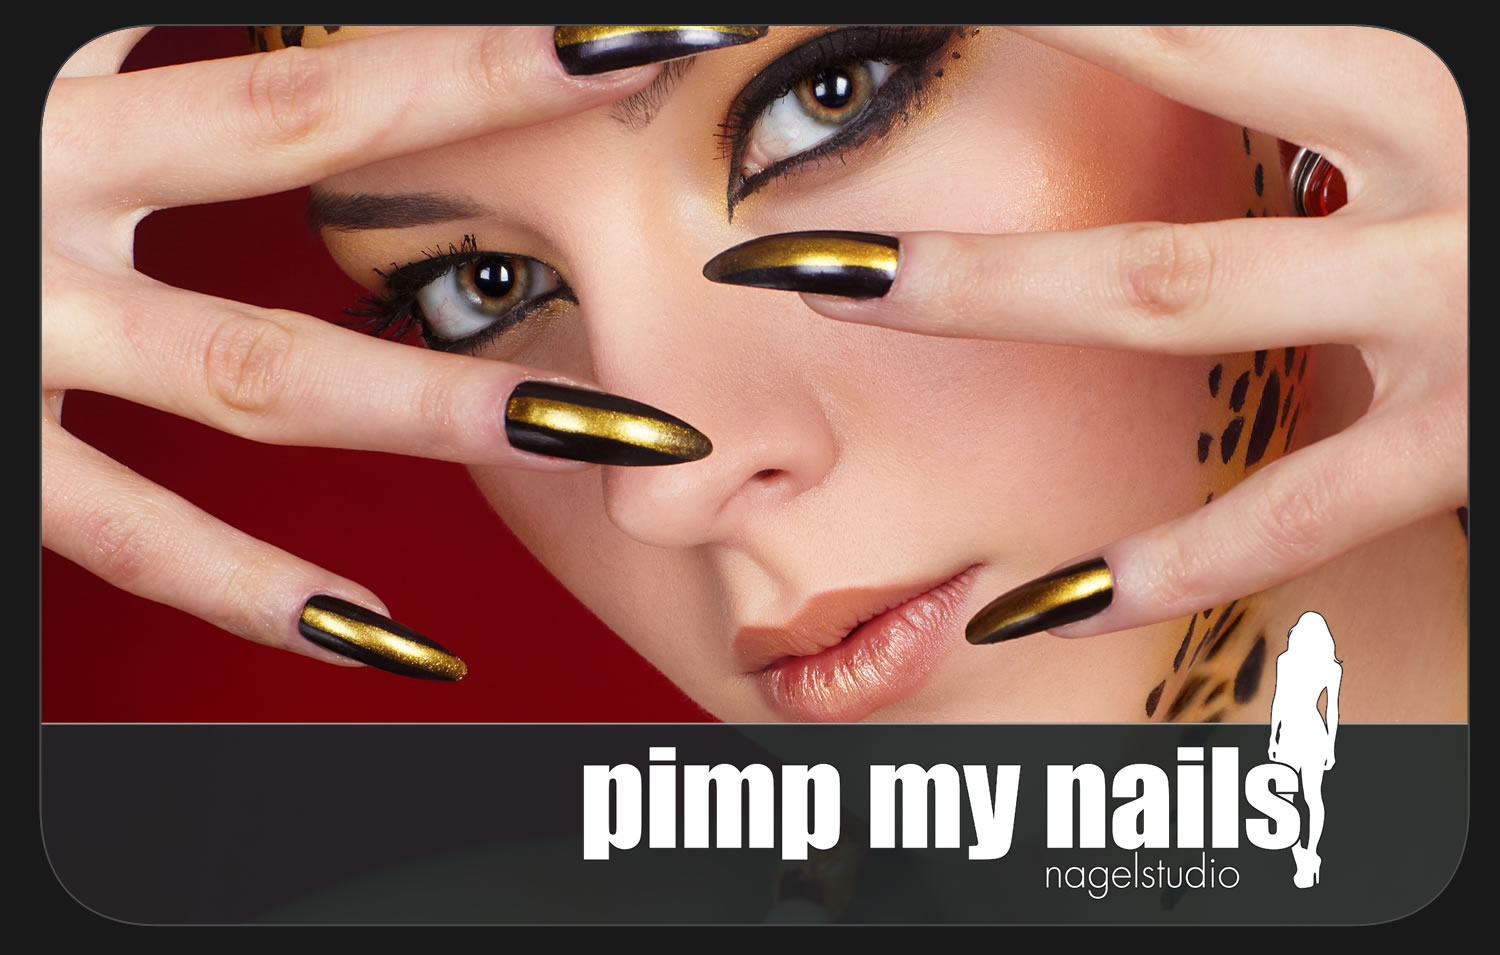 pimp my nails Nagelstudio